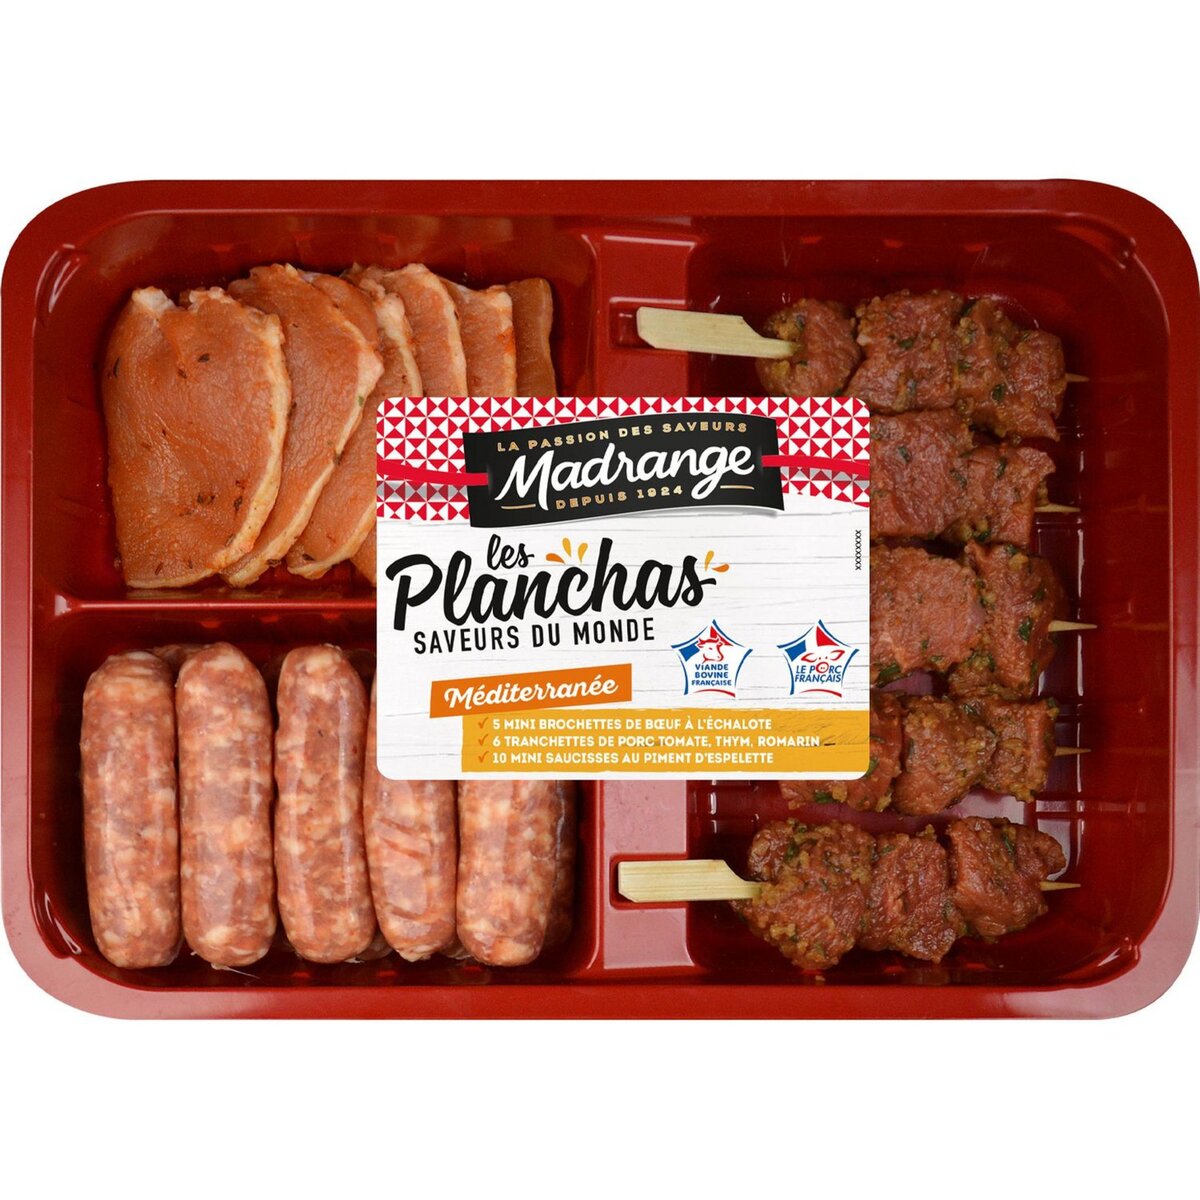 MADRANGE Plancha assortiment de viande saveur méditerrané 550g